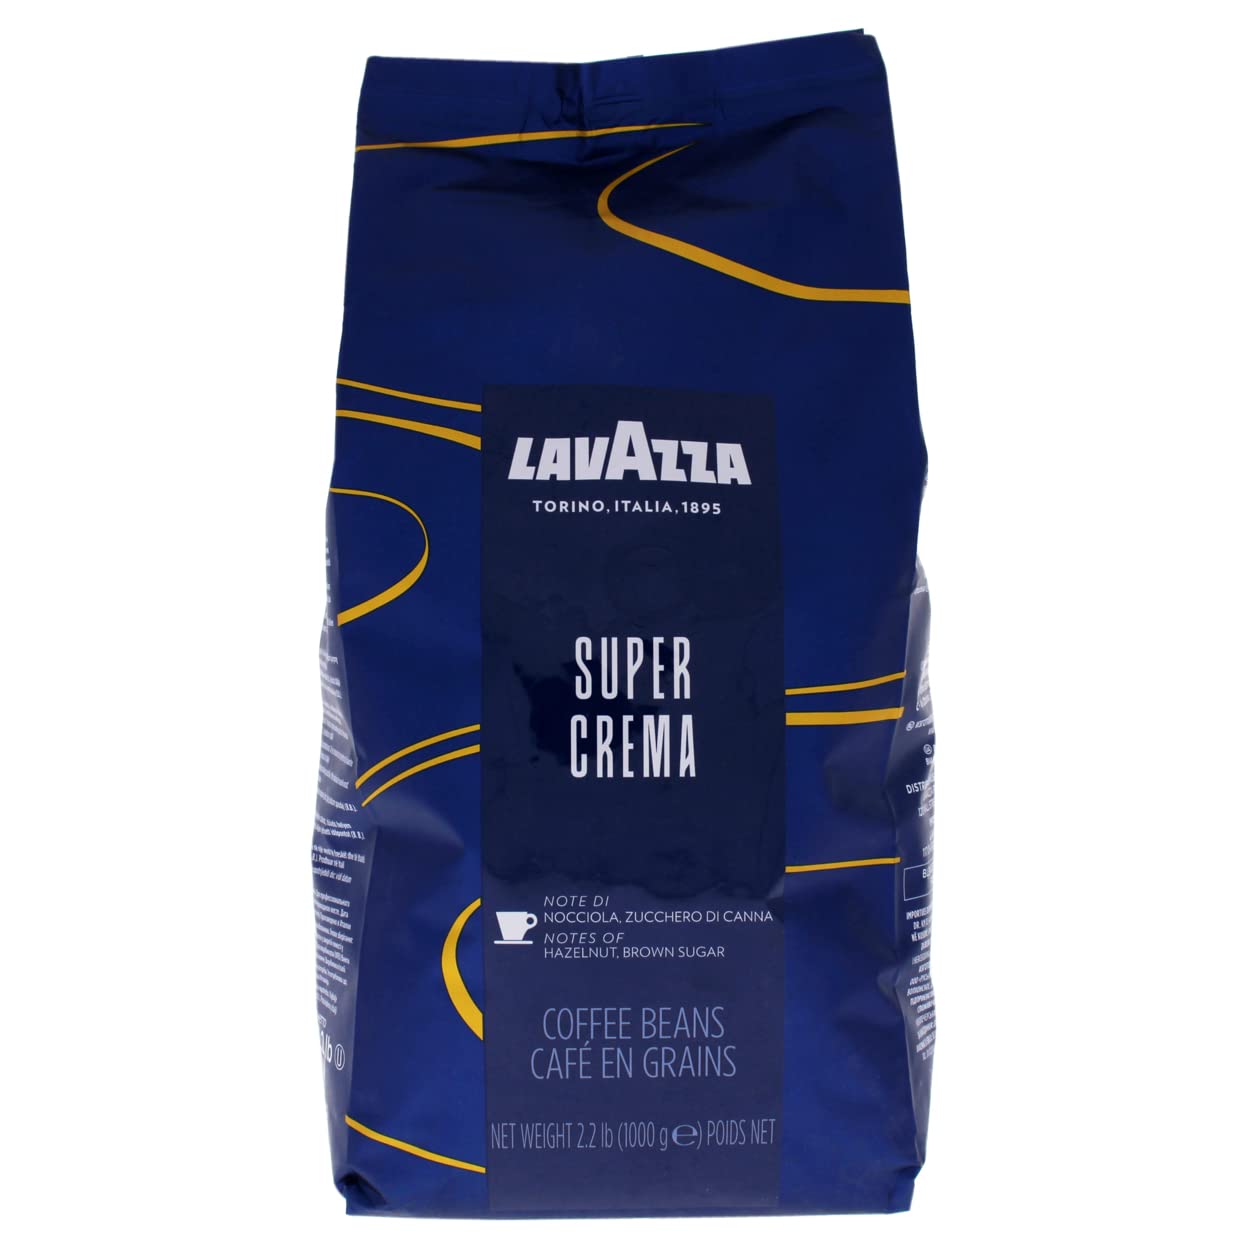 Lavazza Super Crema Whole Bean Espresso Coffee, Bag, Vacuum-Packed